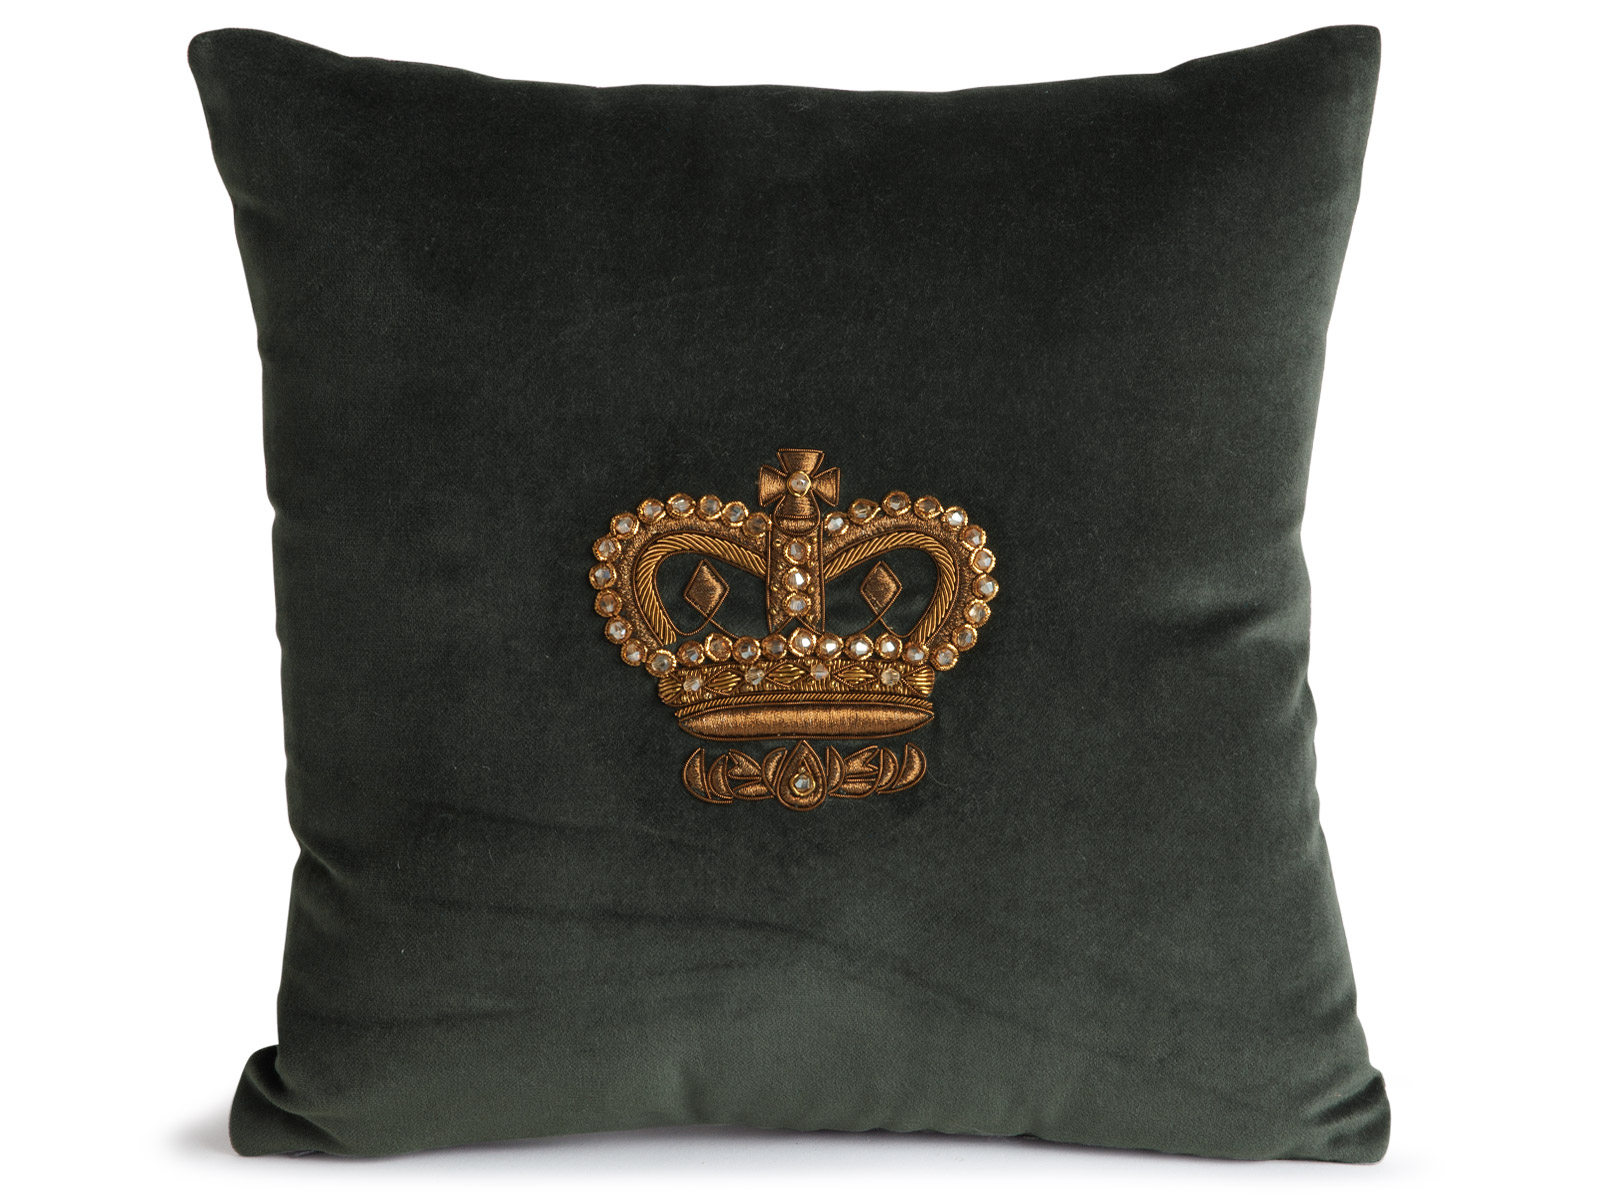 Image of Kingdom pillow